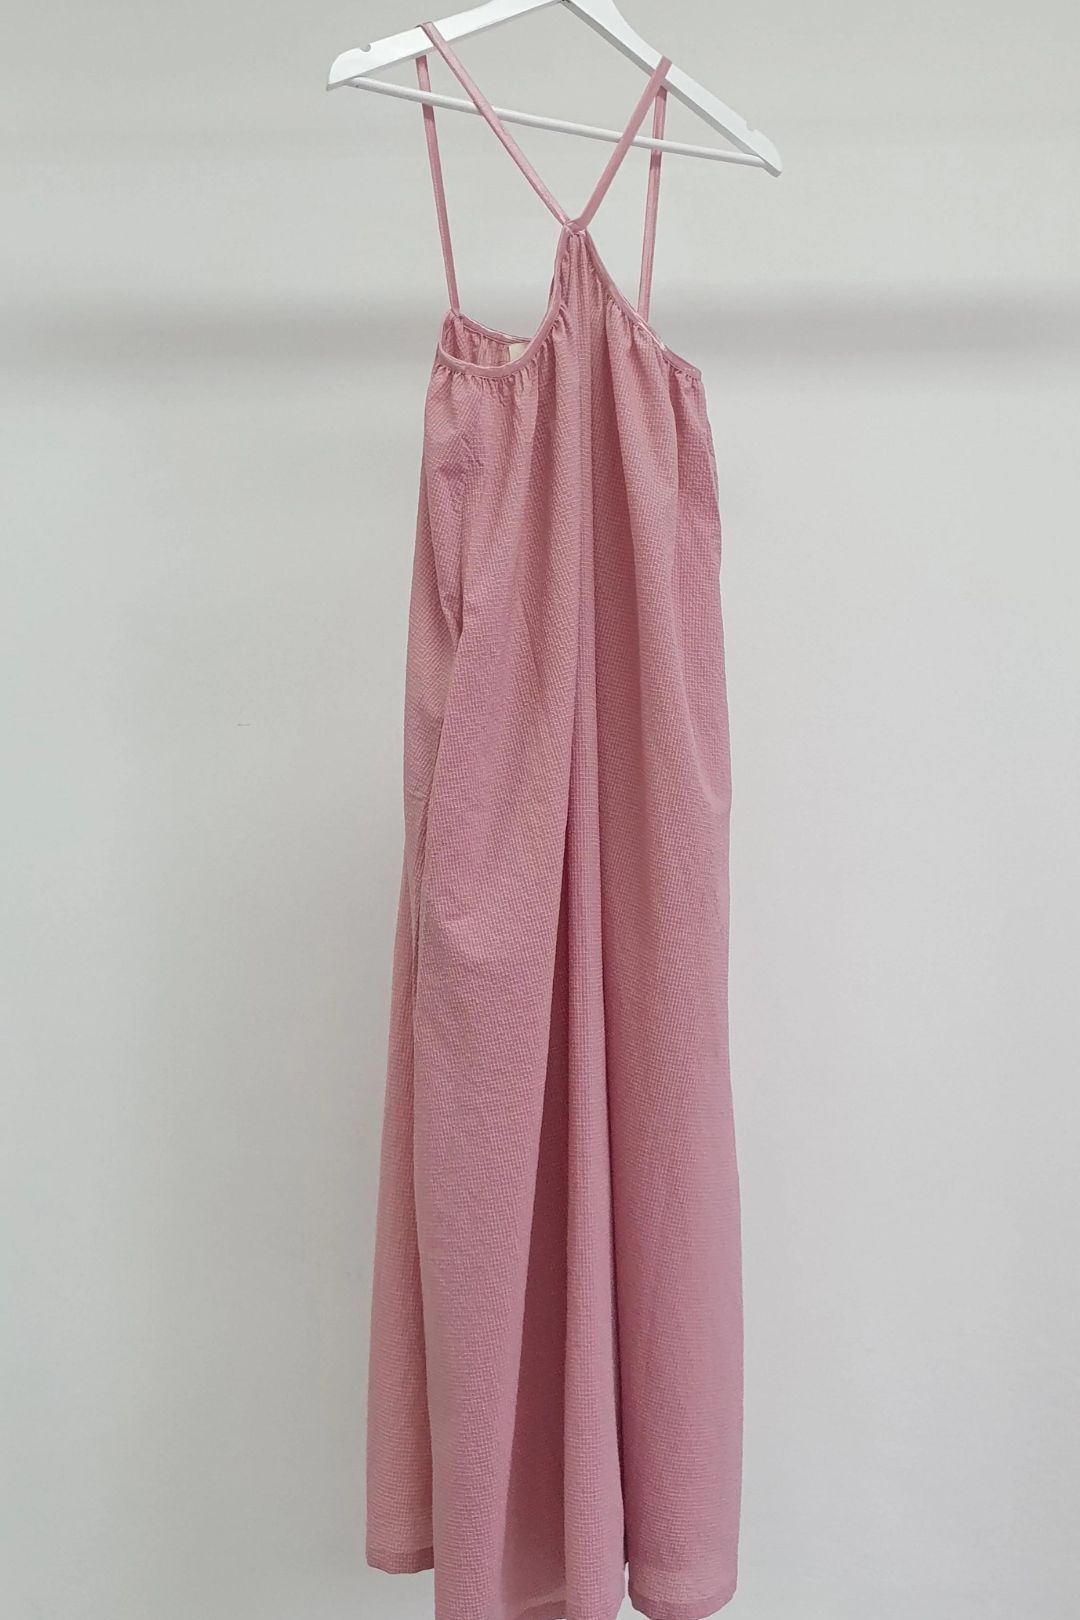 Blanca - Verity Dress in Pink